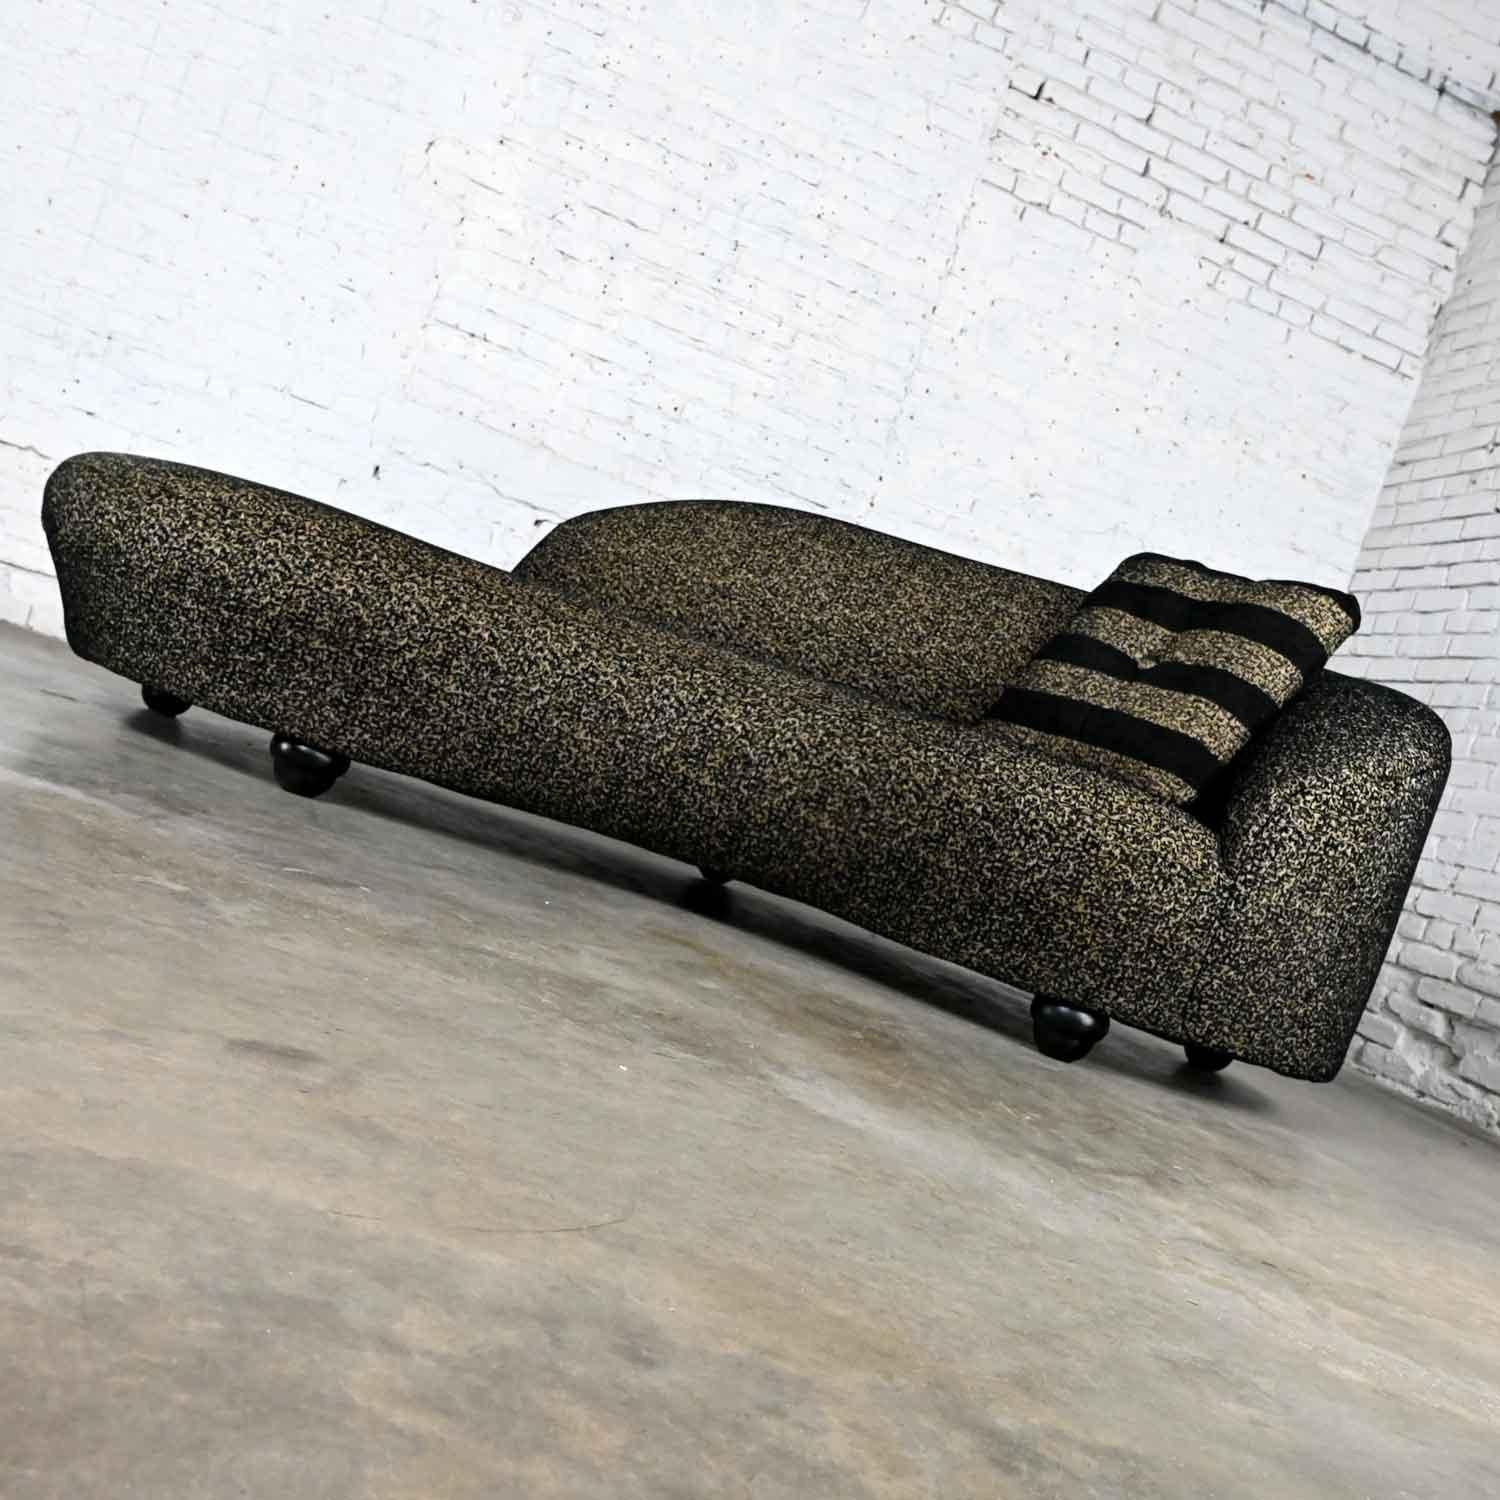 Postmodern Black & Khaki Sort of Animal Print Serpentine Cloud-Like Chaise Sofa For Sale 7